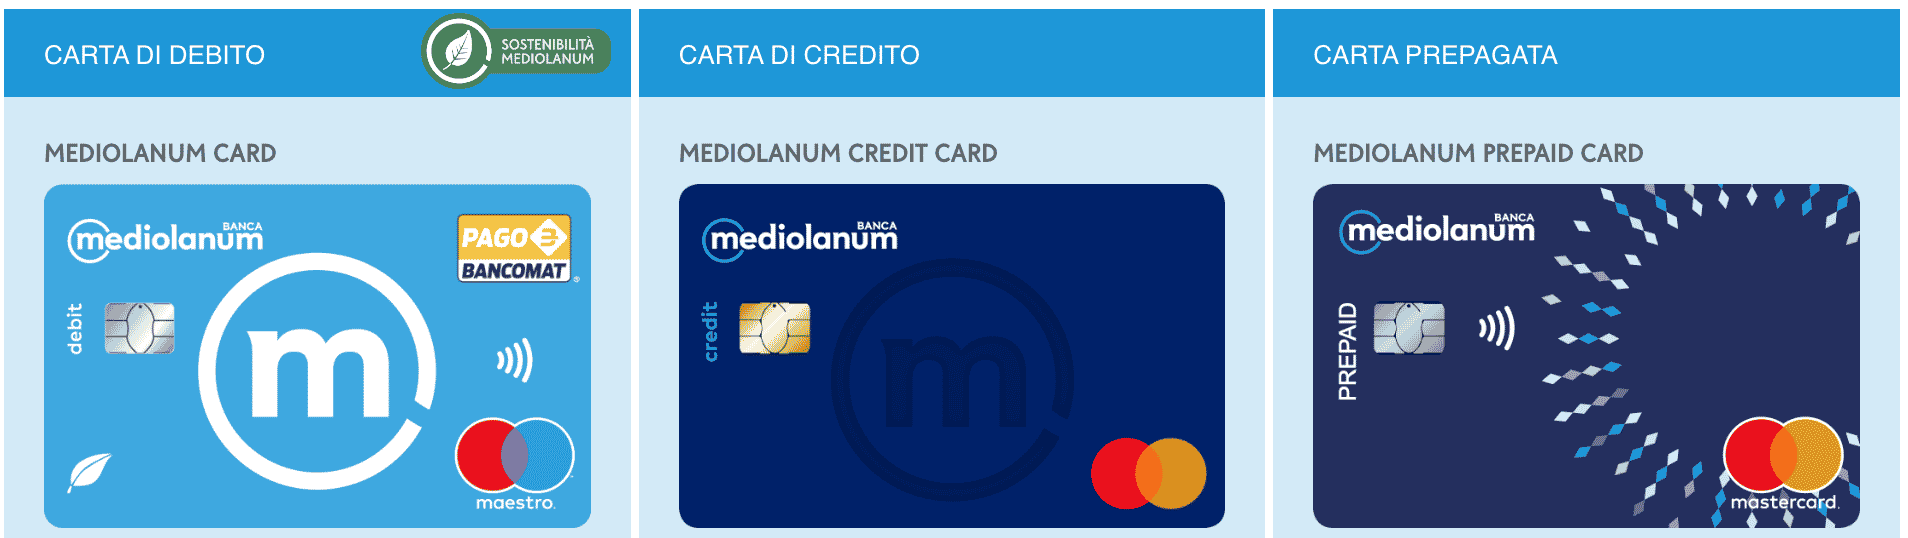 Le tre carte proposte da selfyconto di banca mediolanum. Mediolanum Card, Mediolanum Credit Card e Mediolanum Prepaid Card